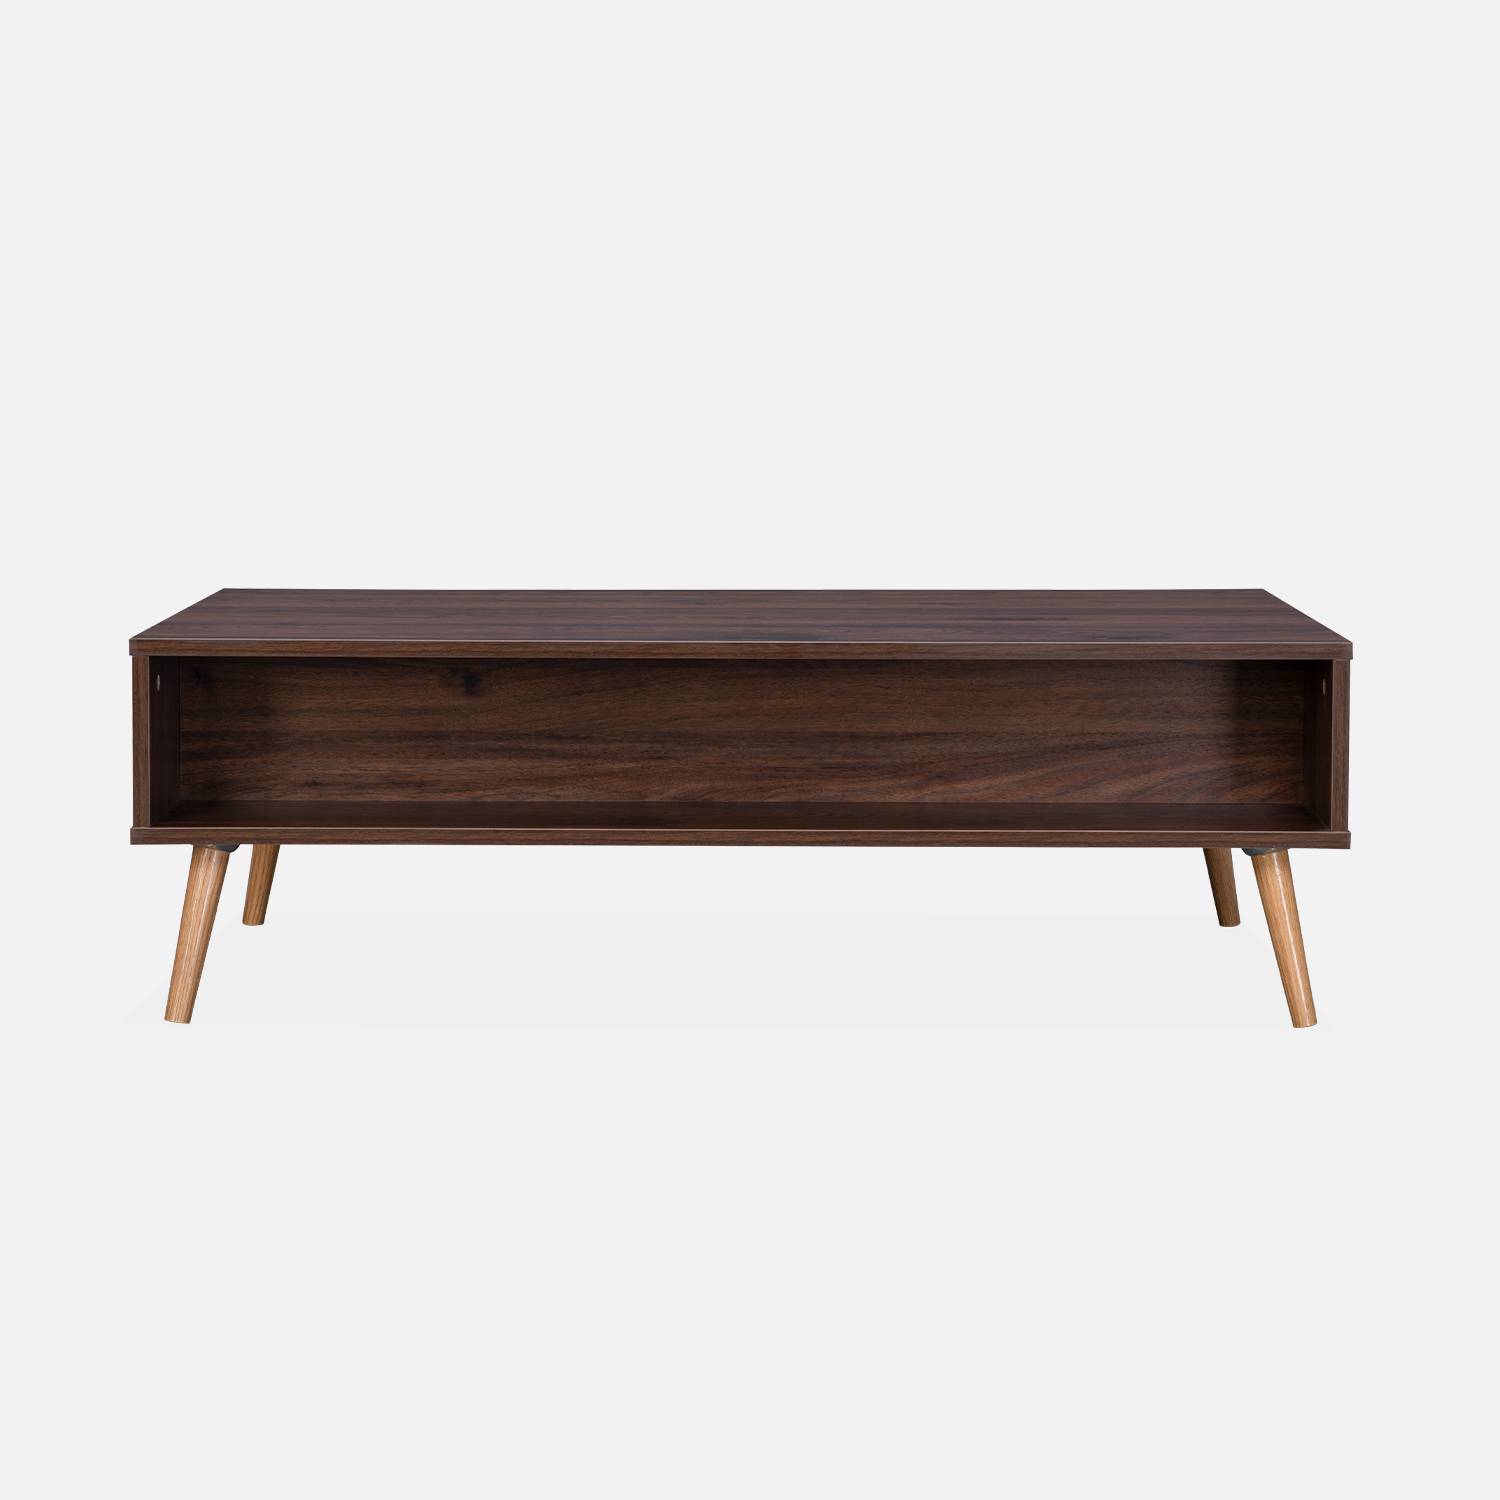  Wood and woven rattan coffee table with storage, 110x59x39cm, dark wood, Boheme,sweeek,Photo5